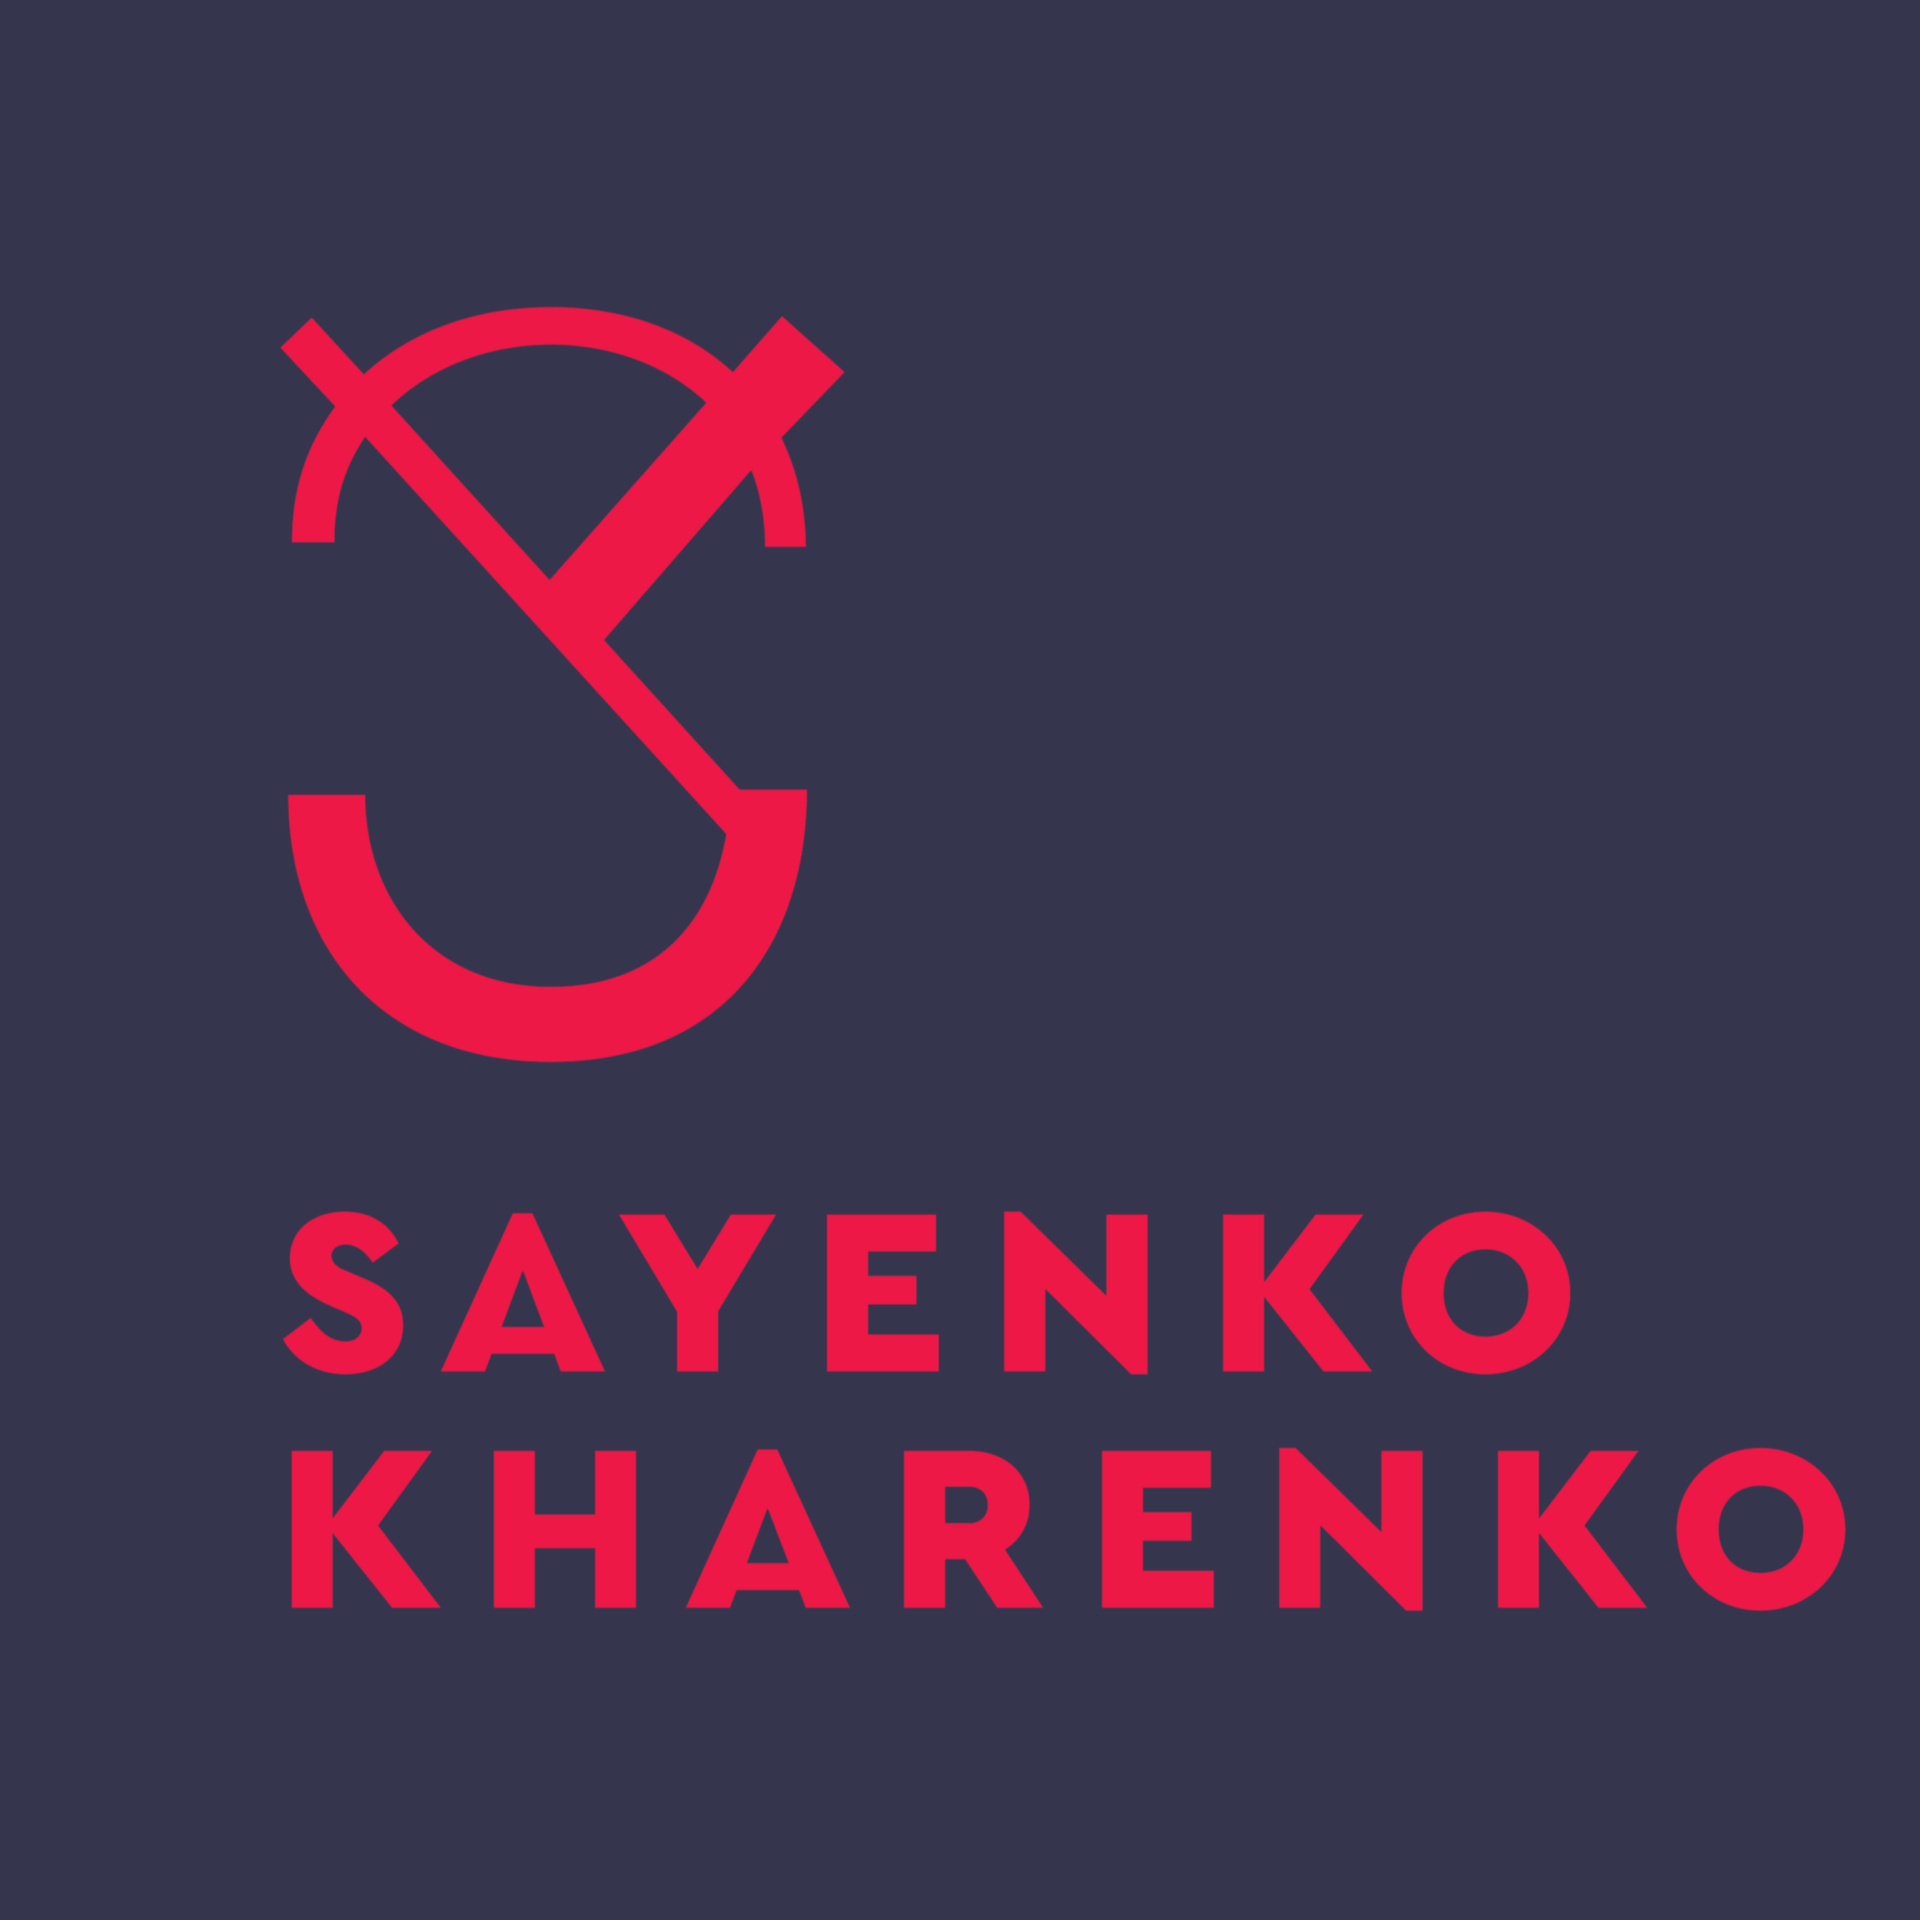 Sayenko Kharenko